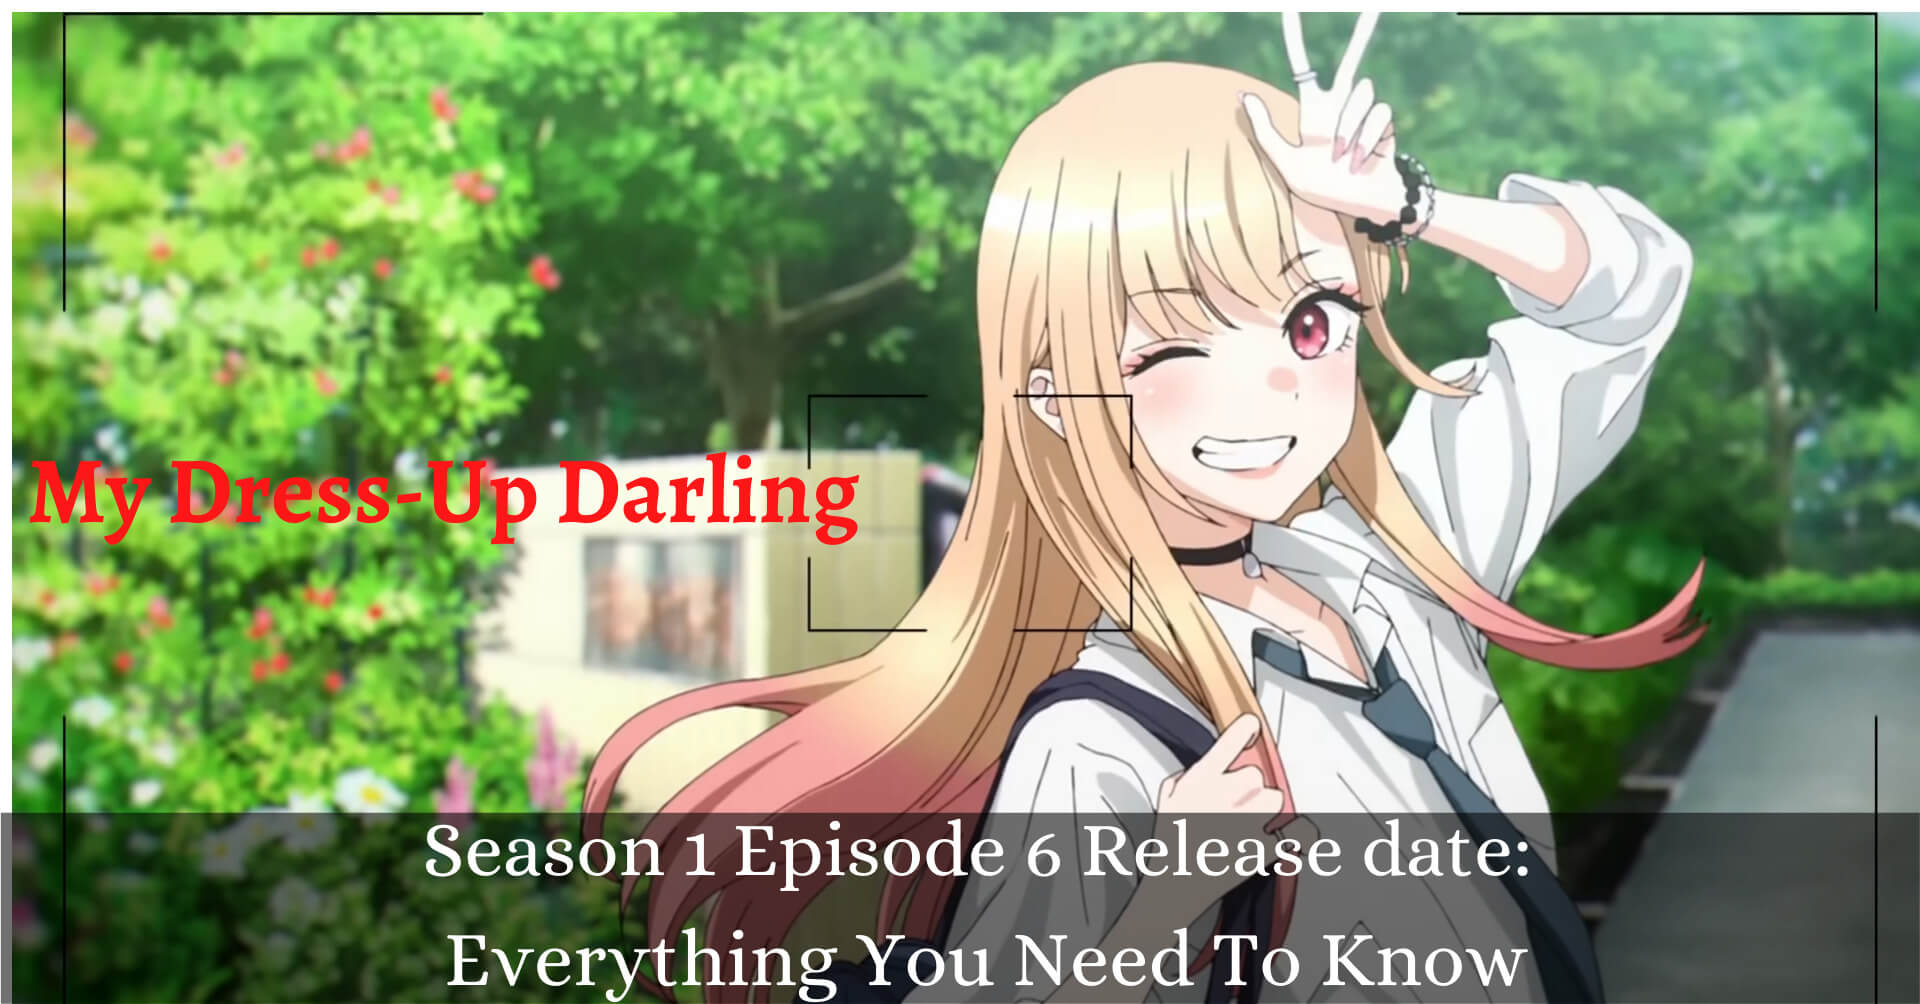 My Dress-Up Darling Season 1 Episode 6 Release date